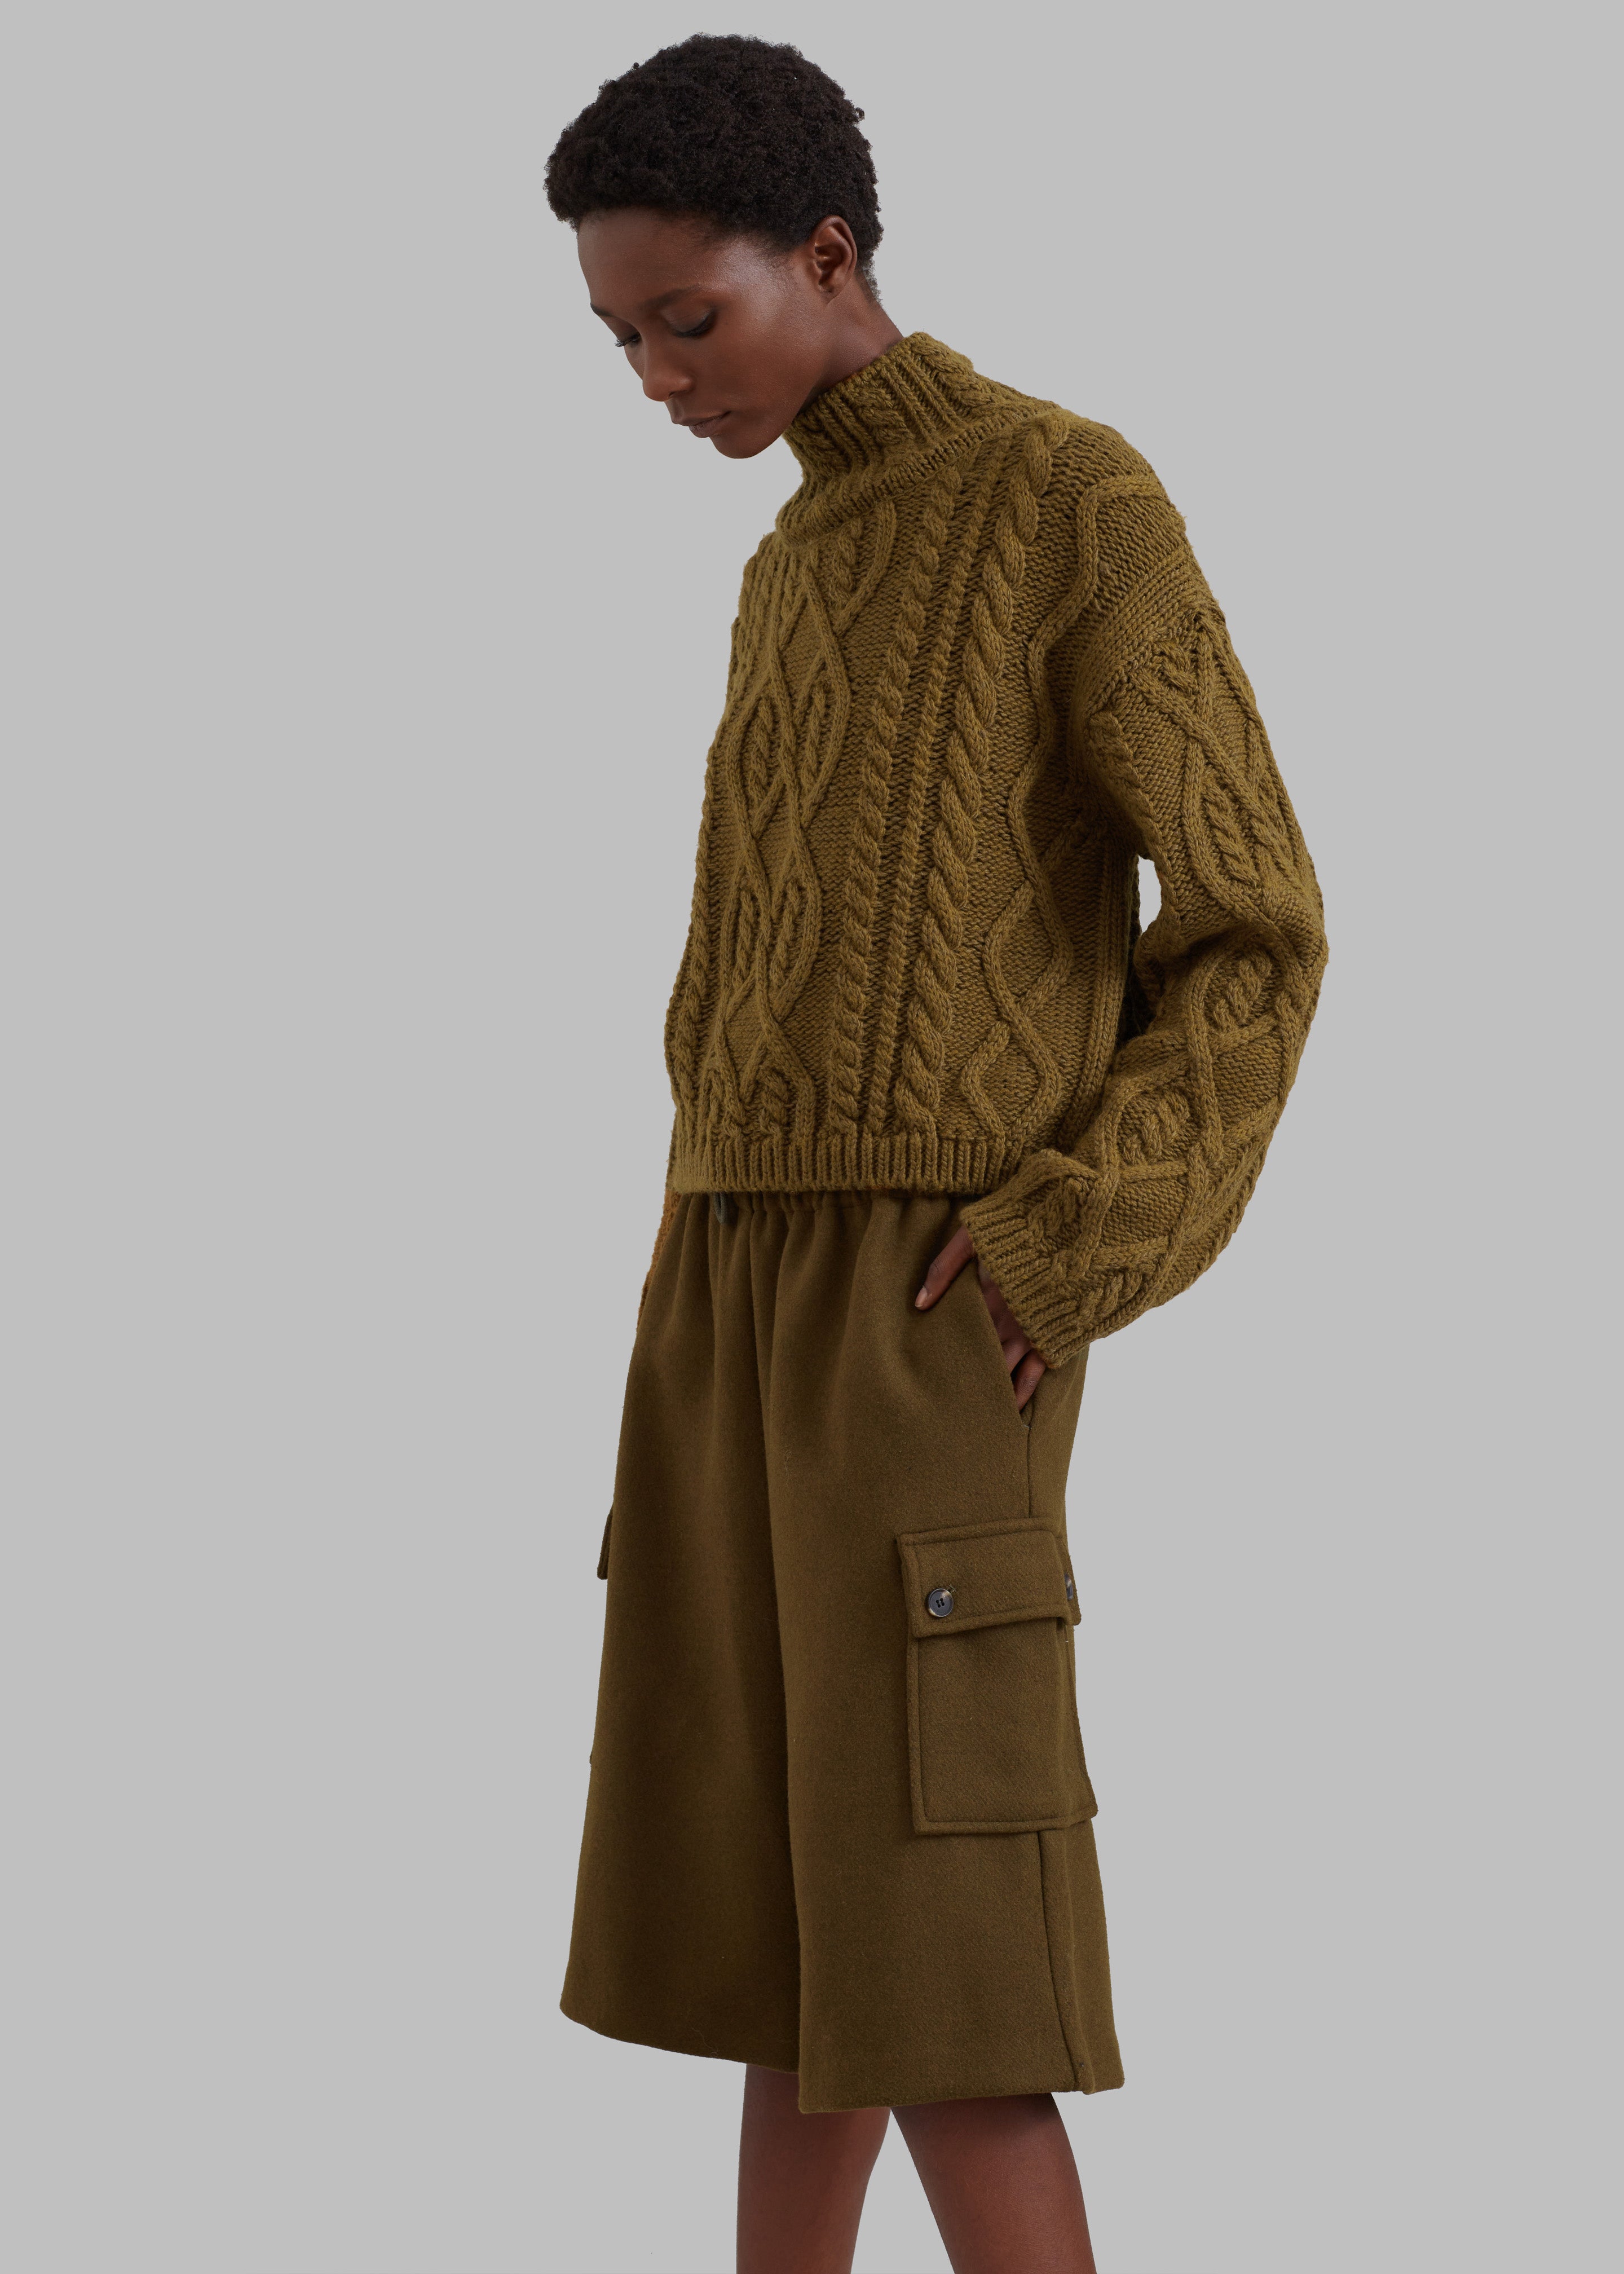 Khaki Cable Knit Sweater - Regular & Plus – Urban Boutique